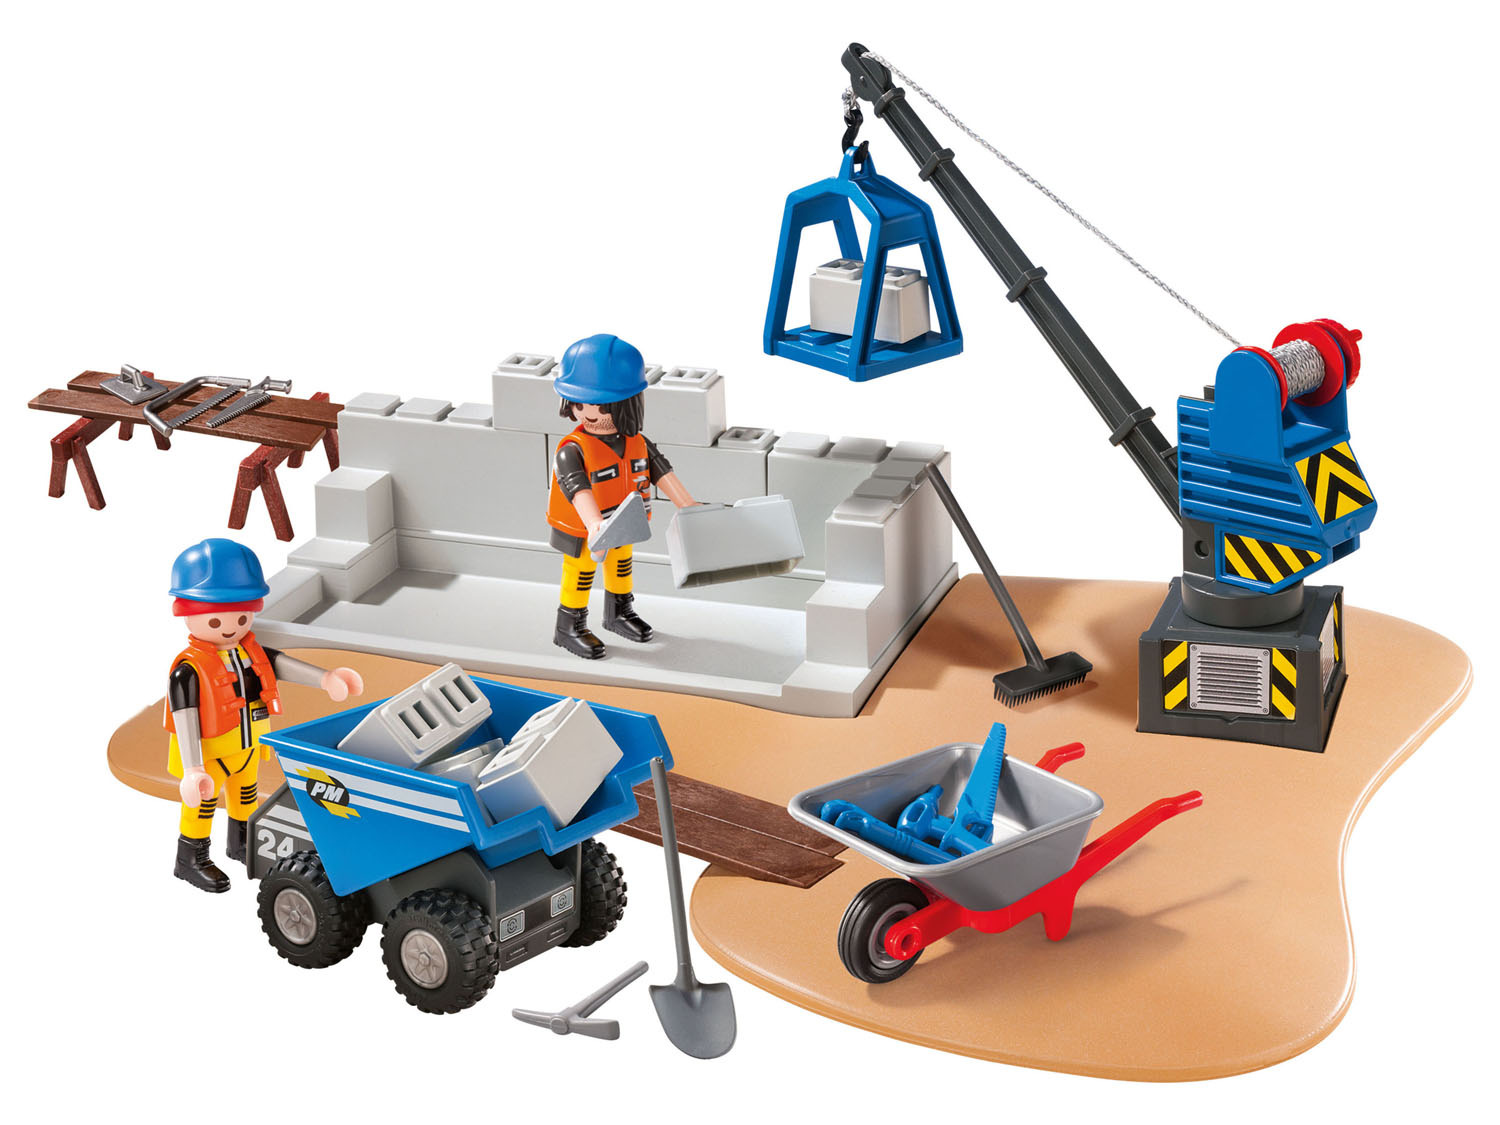 Playmobil Großes Spielset inklusive 2 Figuren u.v.m.